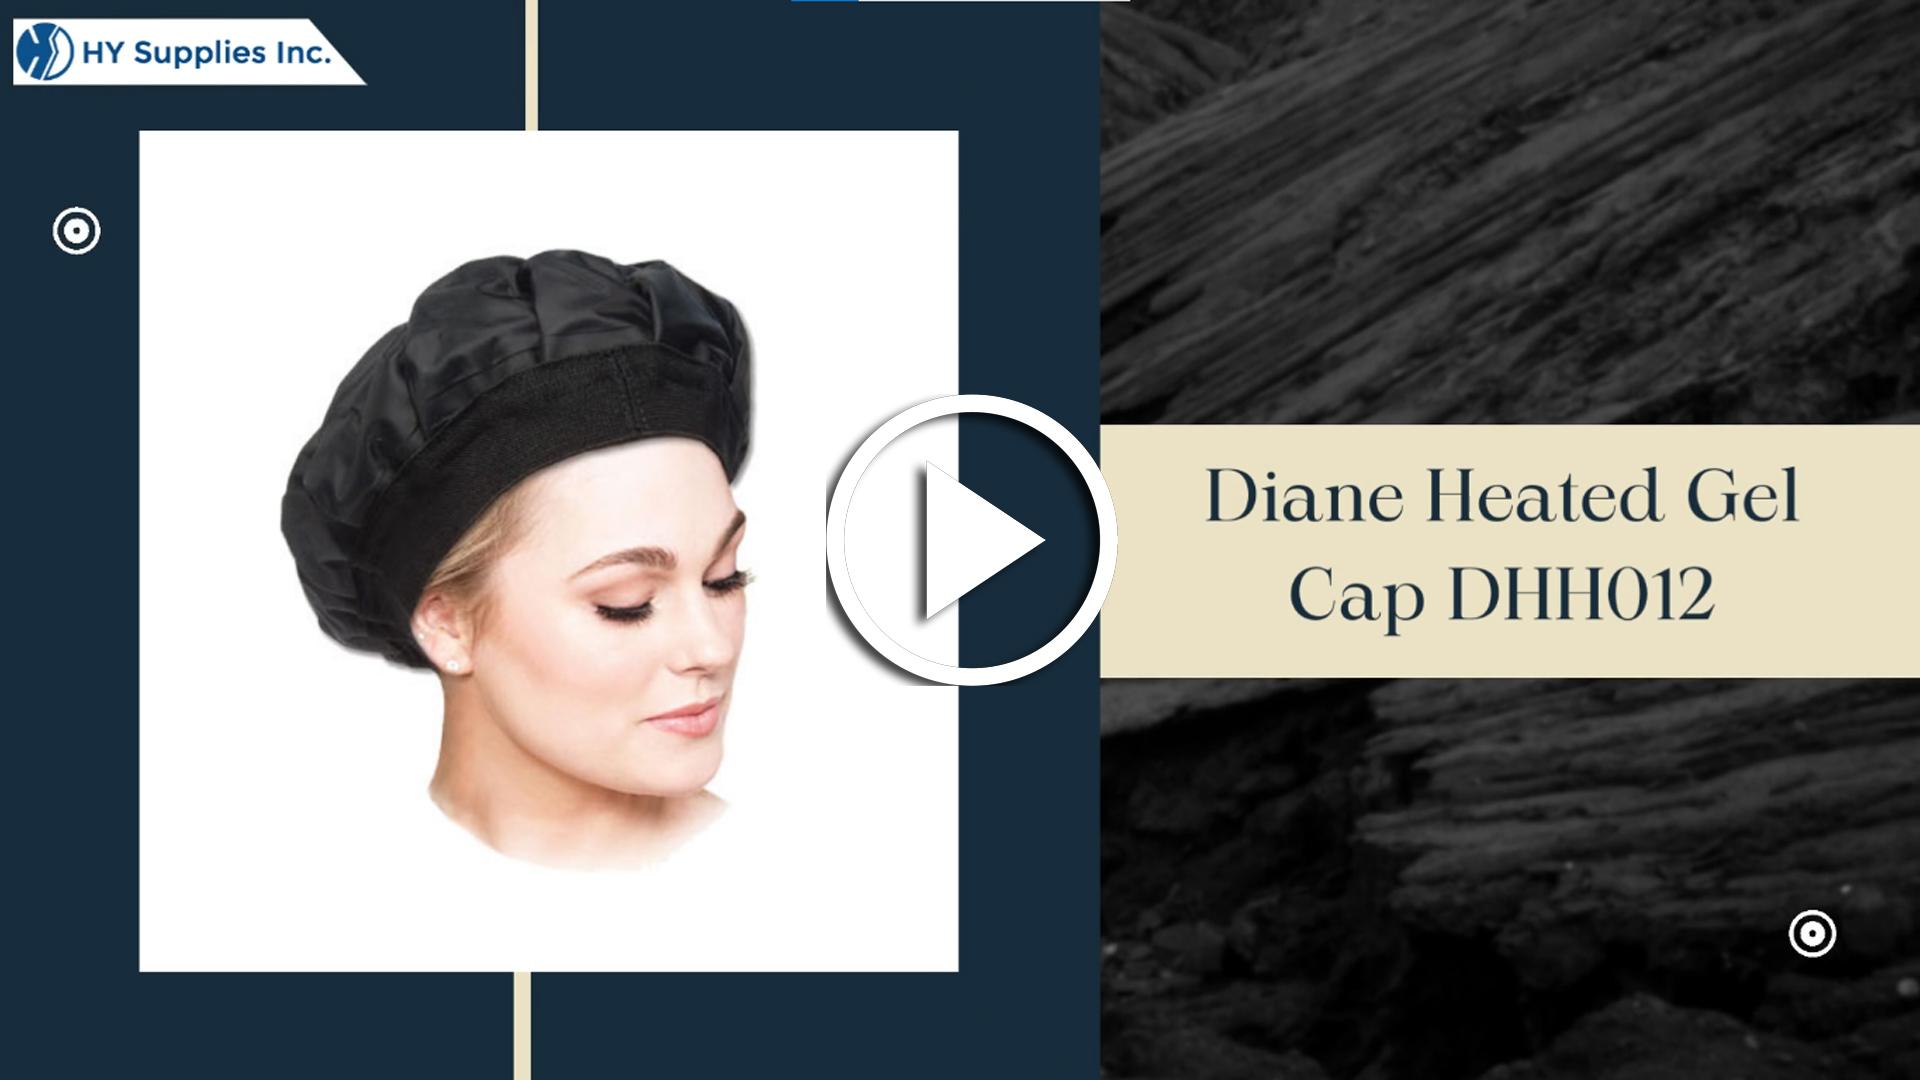 Diane Heated Gel Cap DHH012